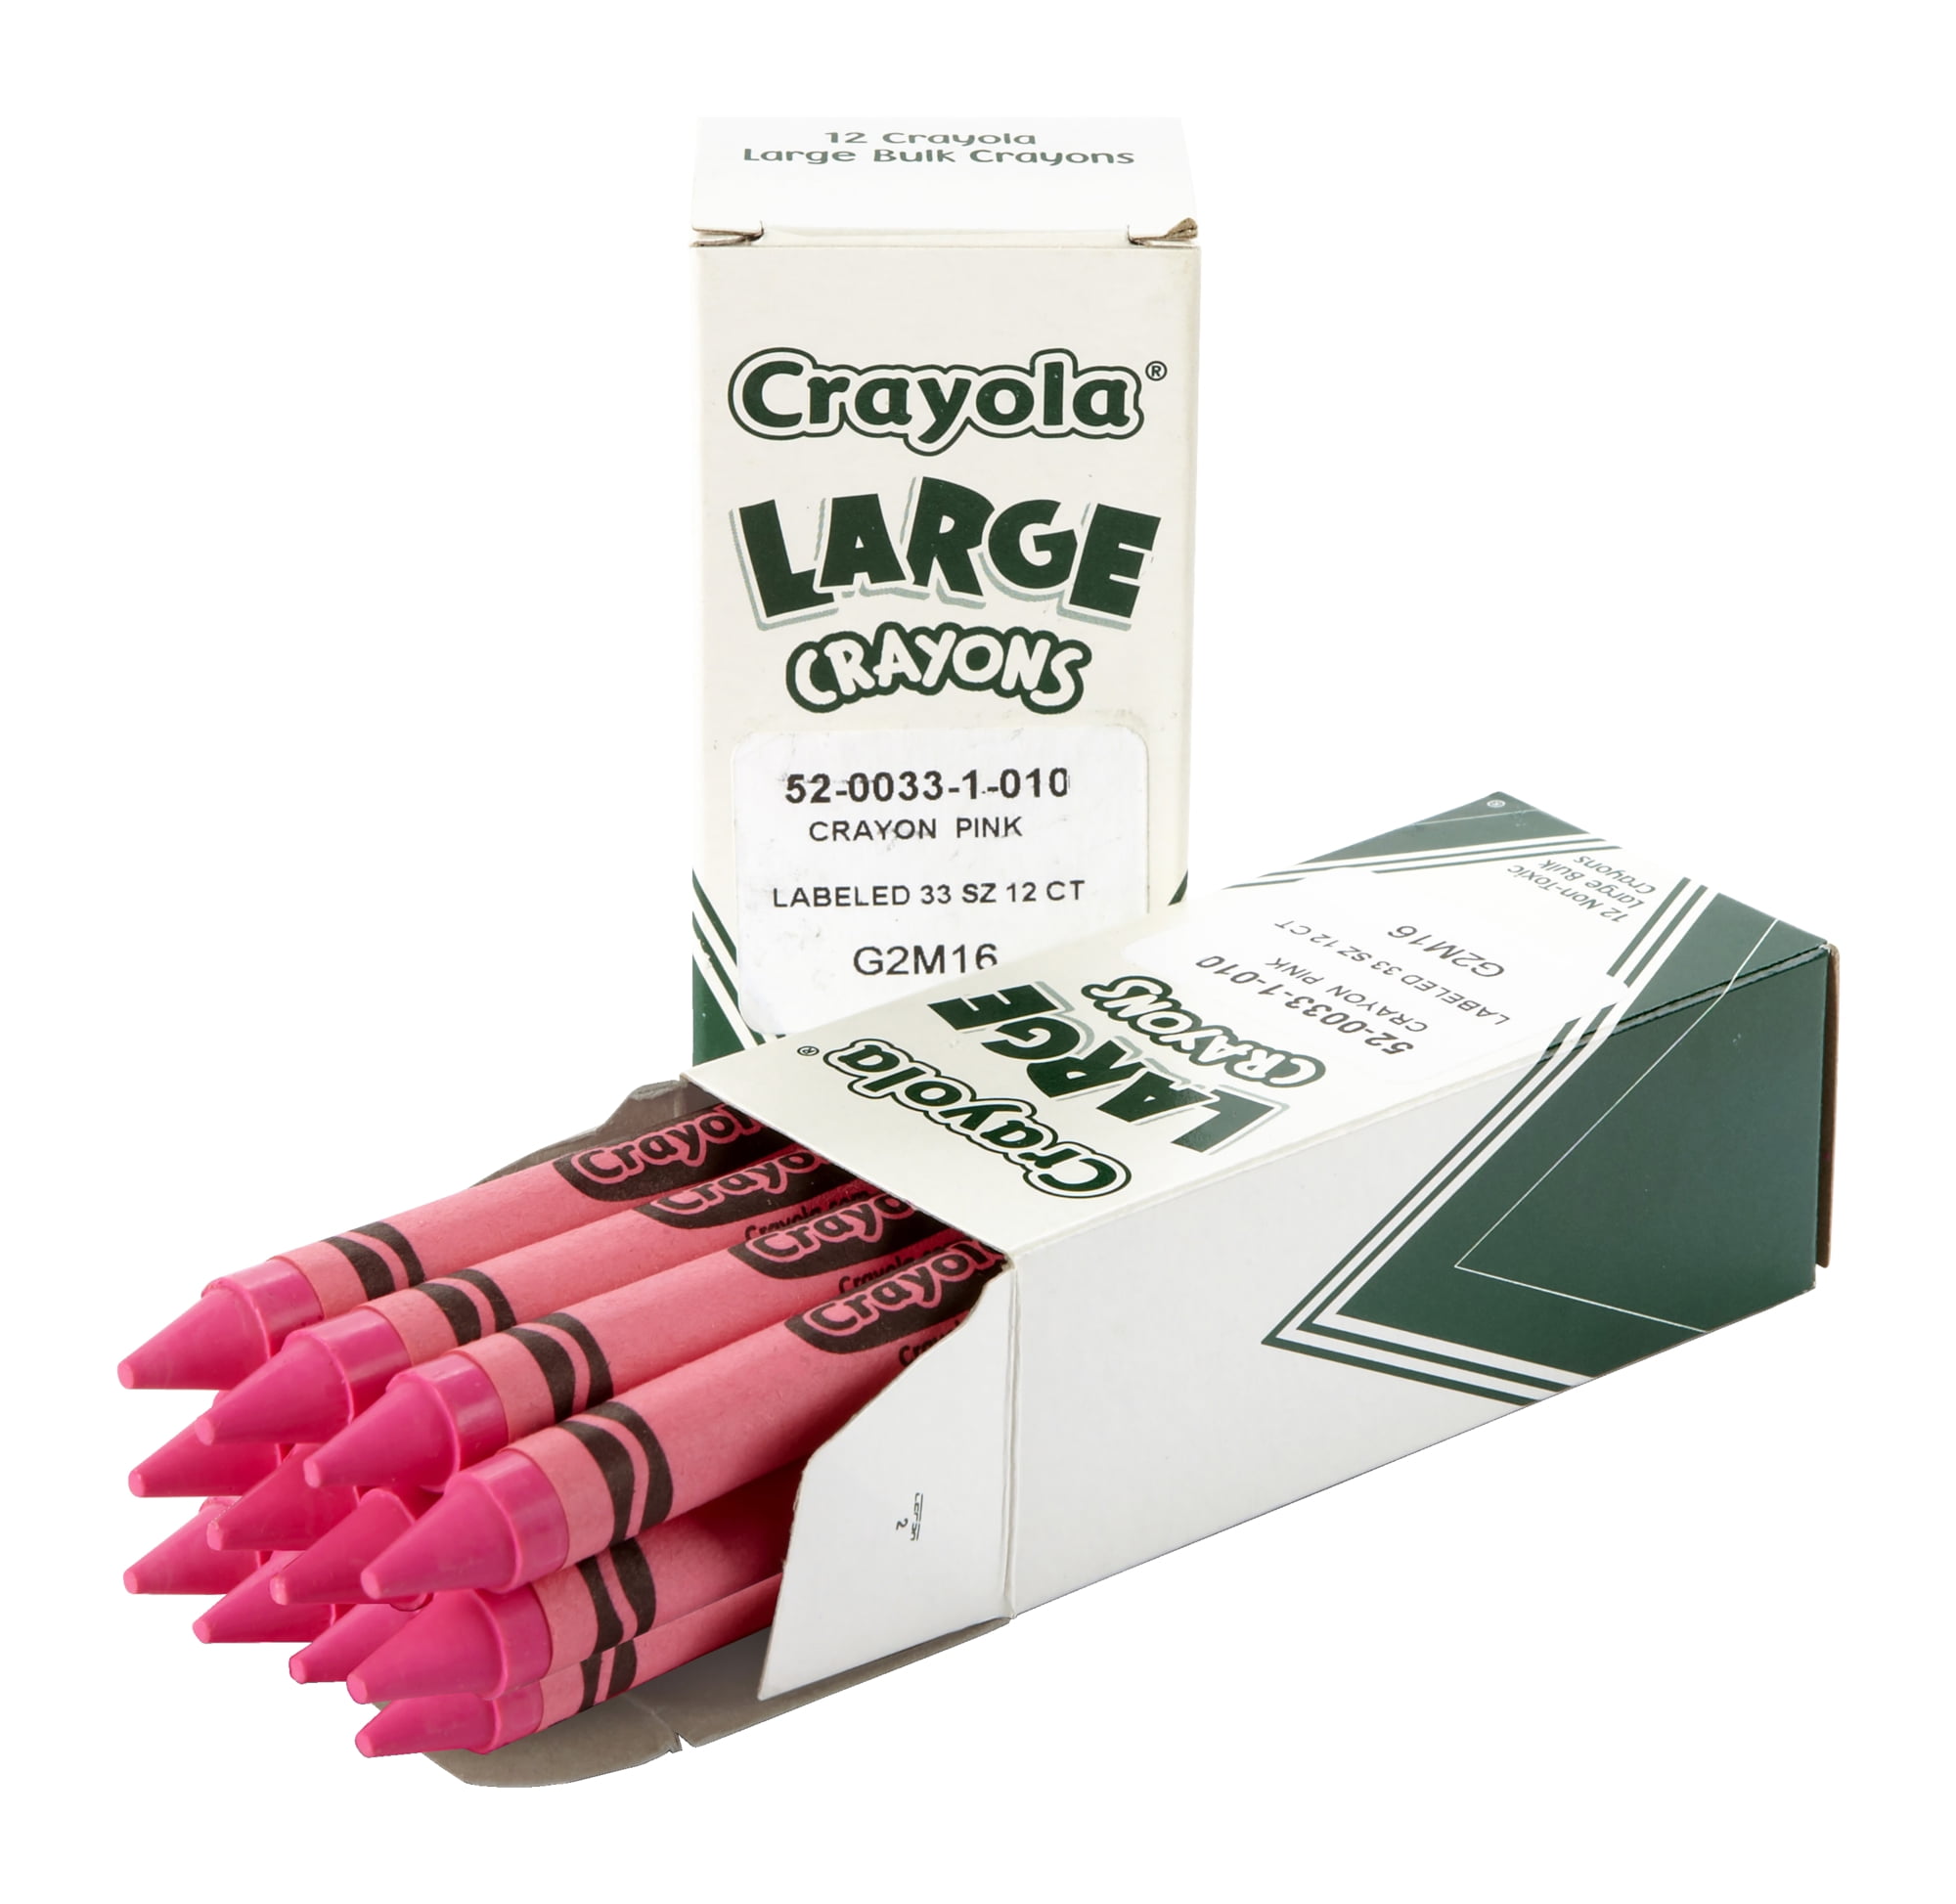 Crayola Crayons in Pink, Bulk Crayons, 12 Count (5208361010) : Arts, Crafts  & Sewing 